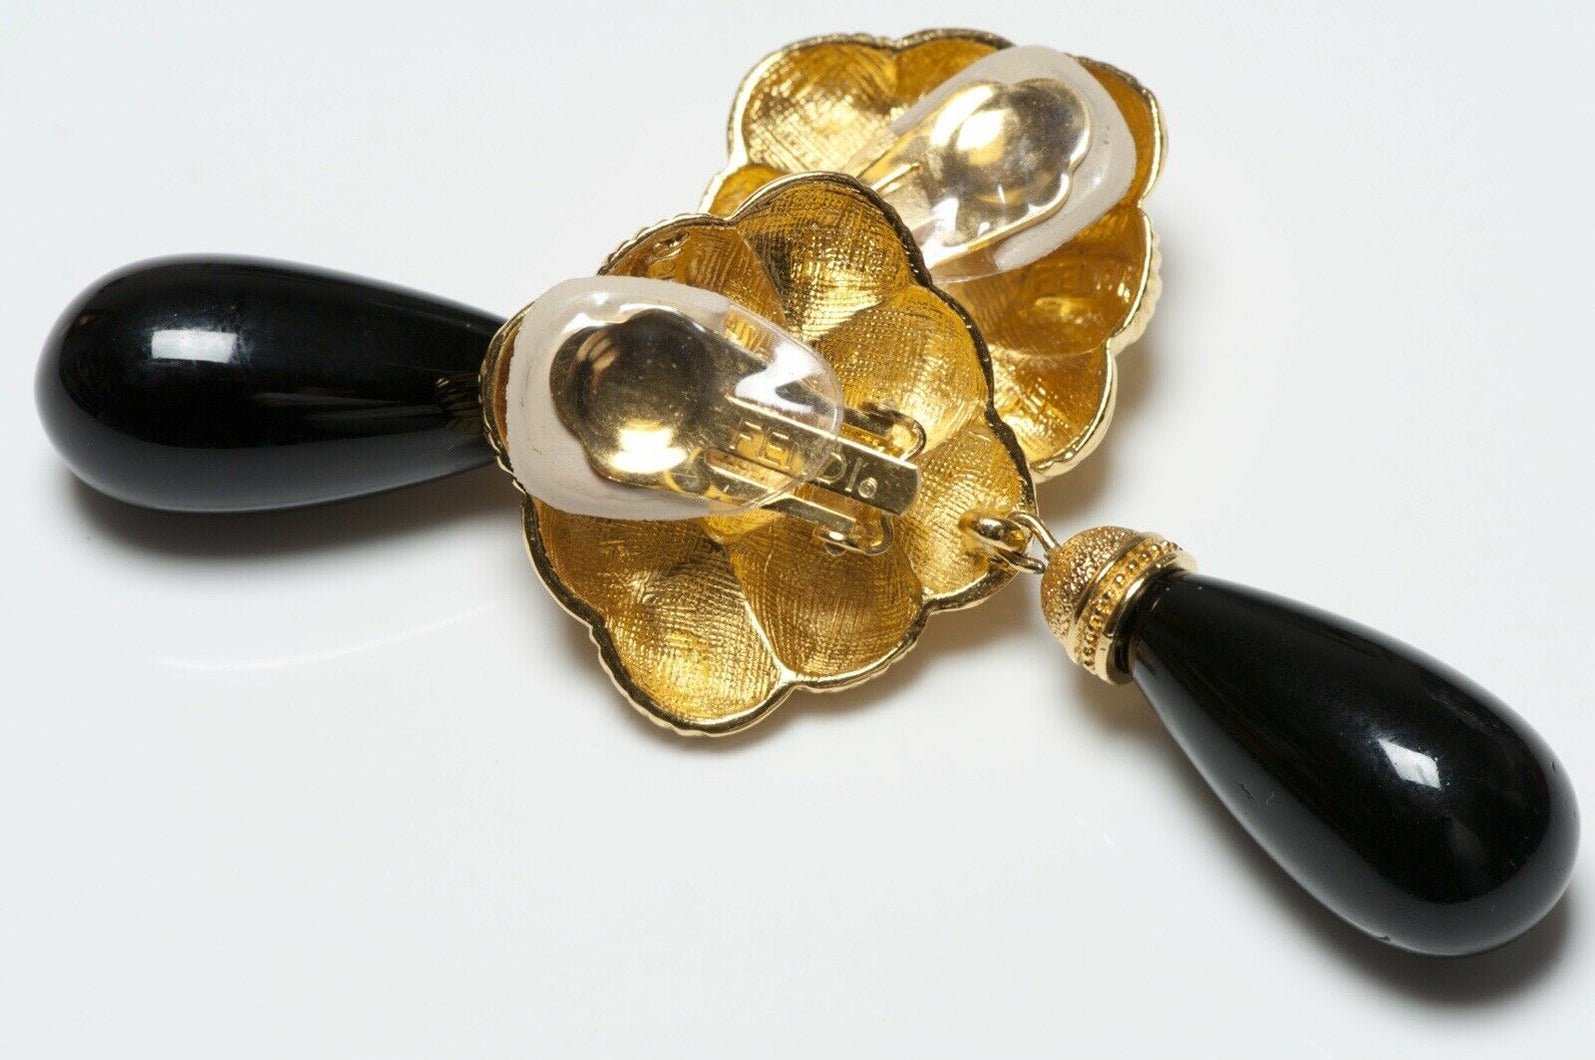 FENDI Long Woven Gold Plated Black Glass Drop Earrings - DSF Antique Jewelry